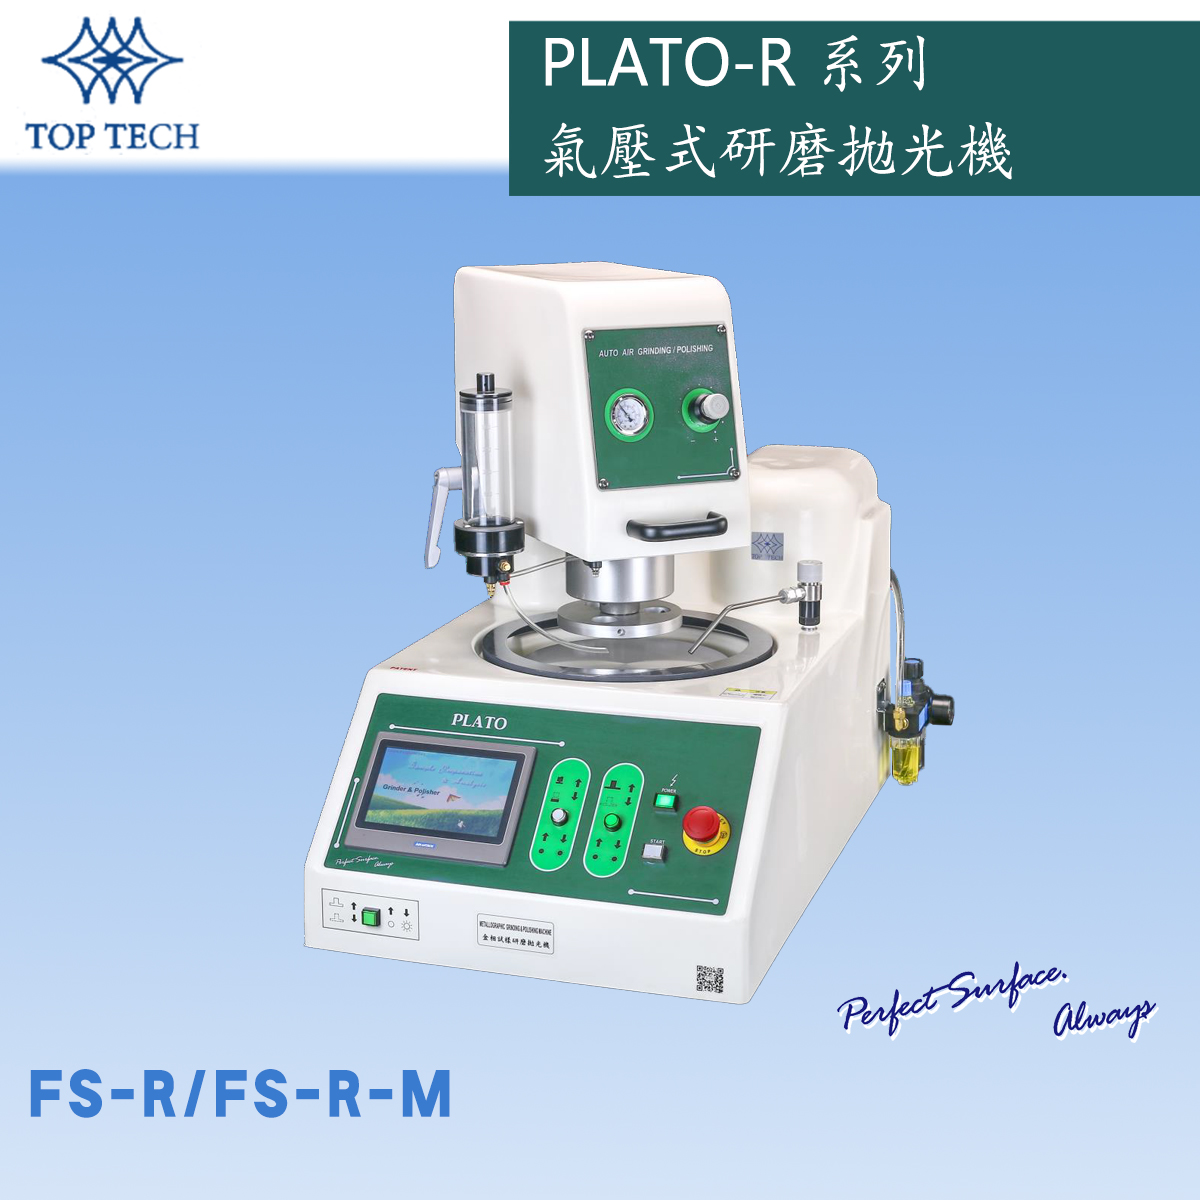 PLATO-R系列 气压式研磨拋光机